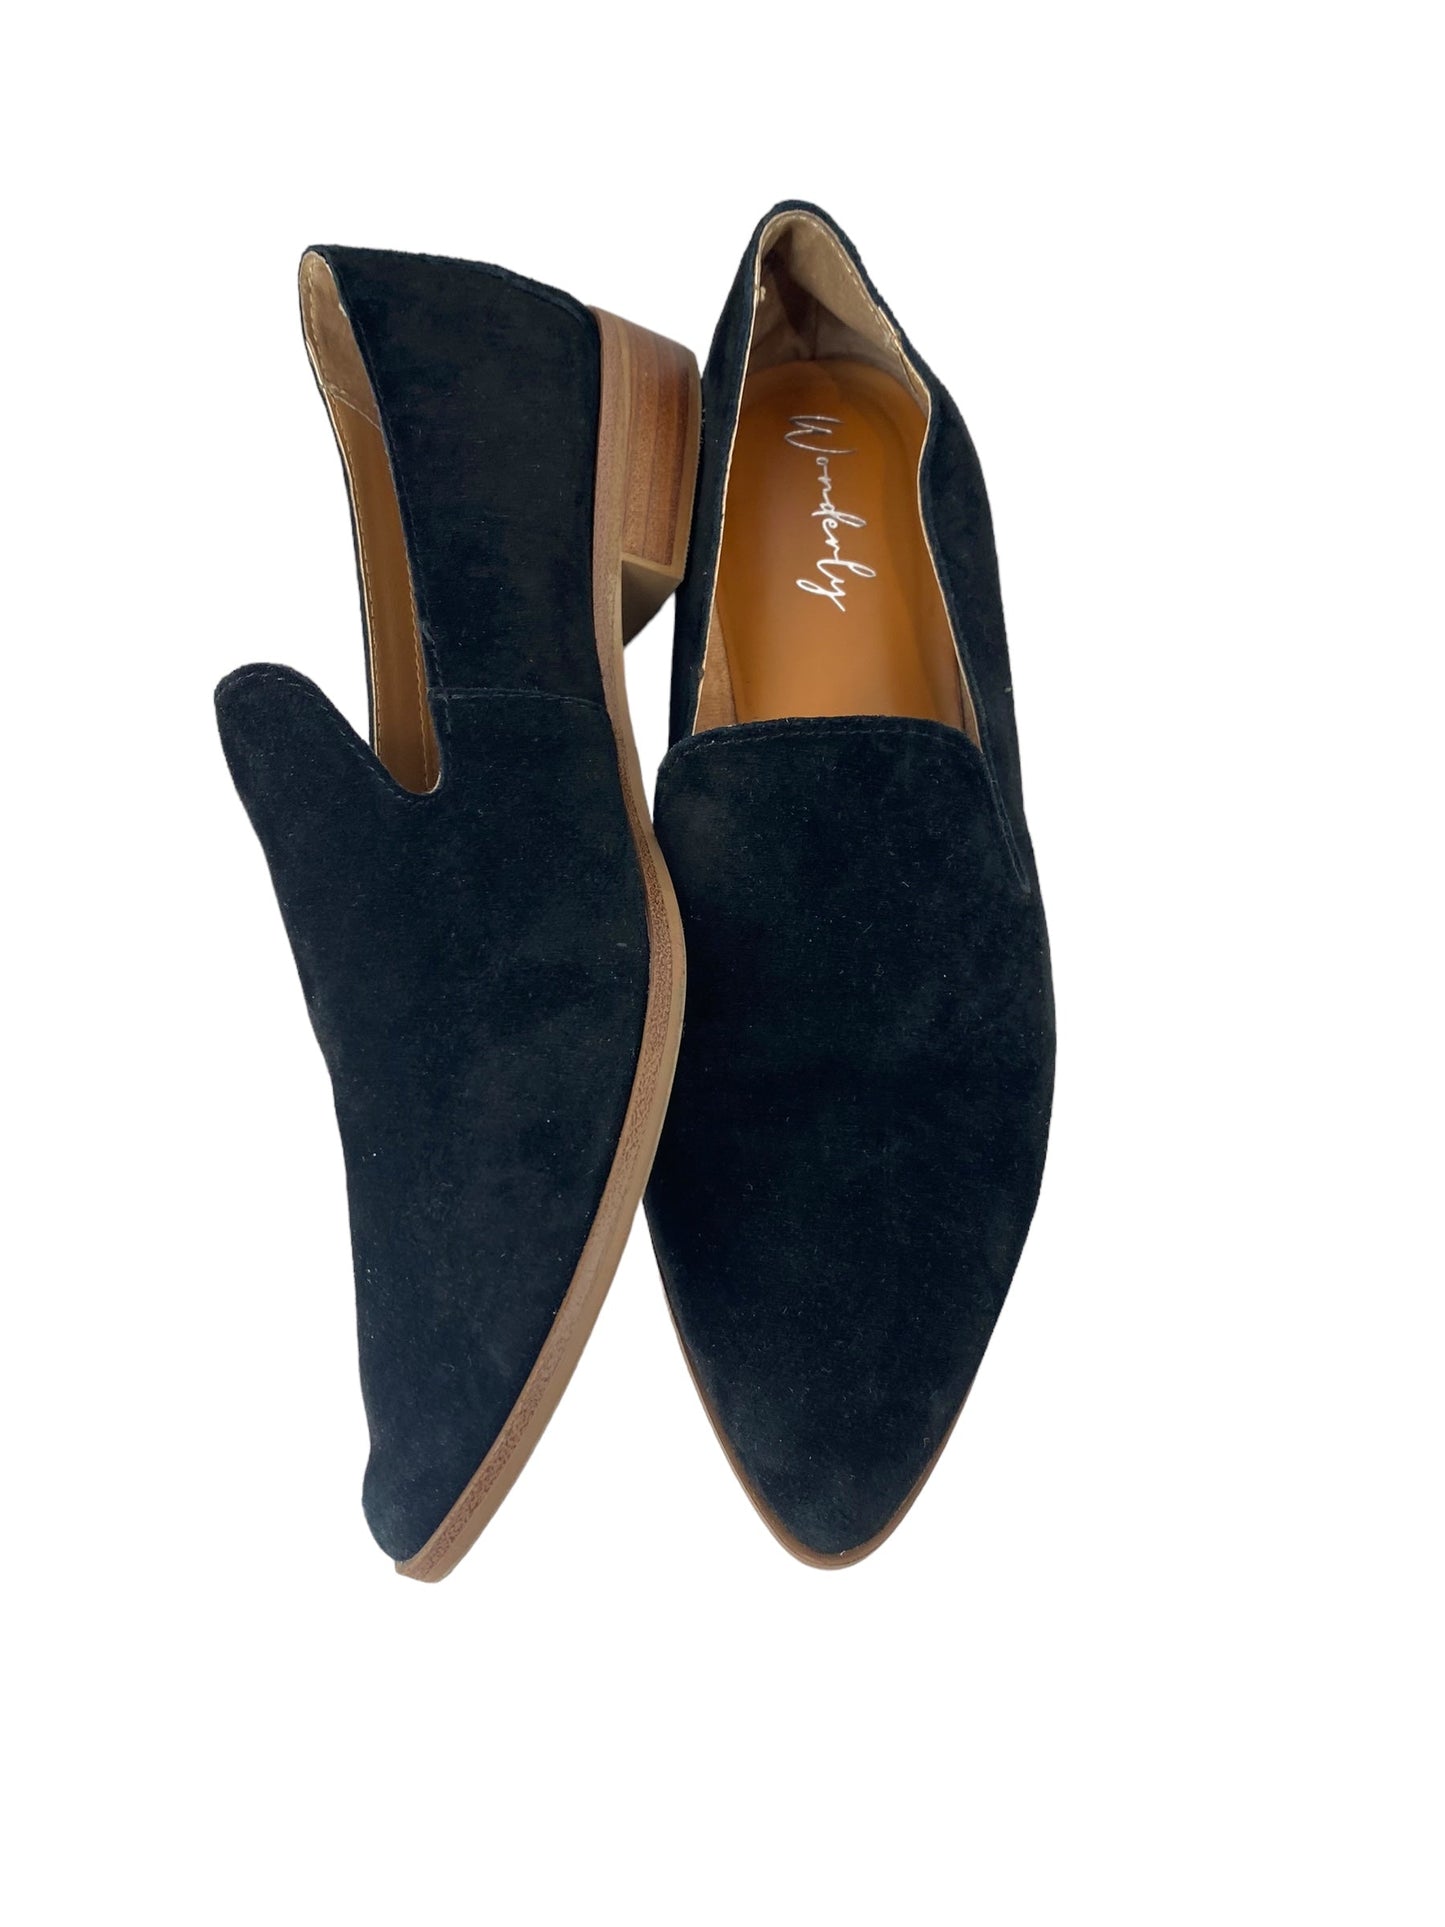 Black Shoes Flats Wonderly, Size 8